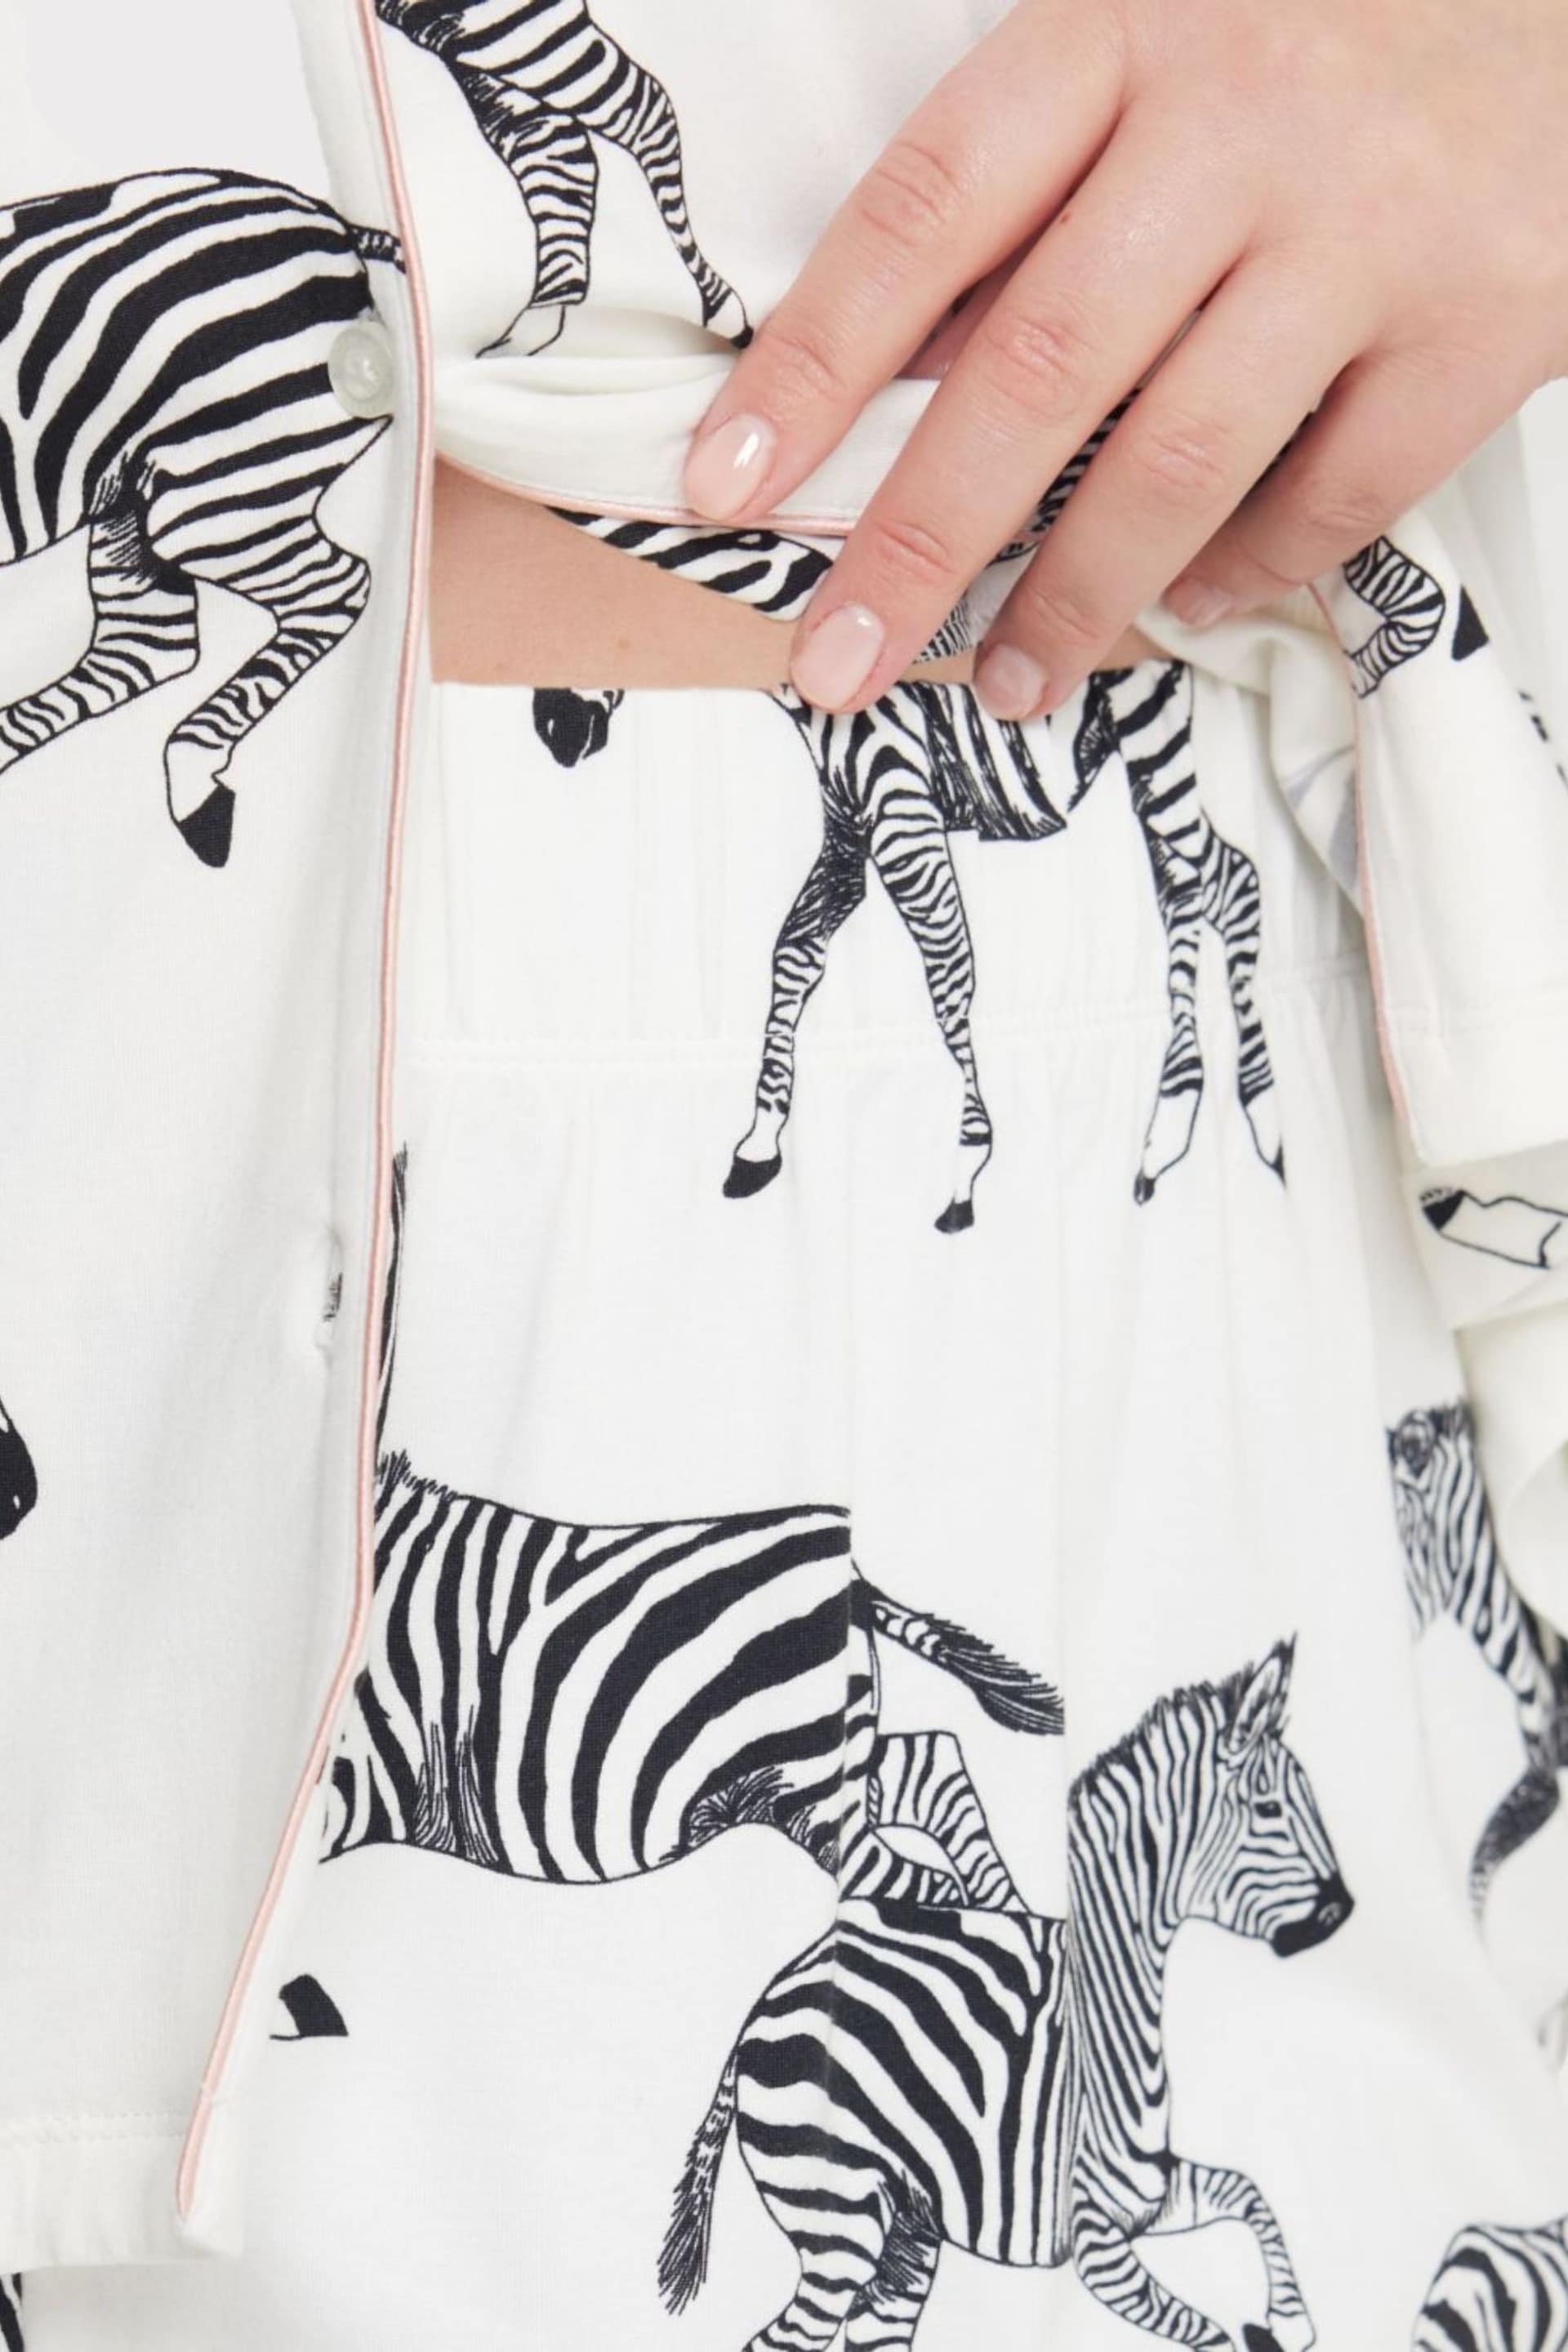 Chelsea Peers Cream Curve Zebra Button Up Pyjamas Set - Image 6 of 6